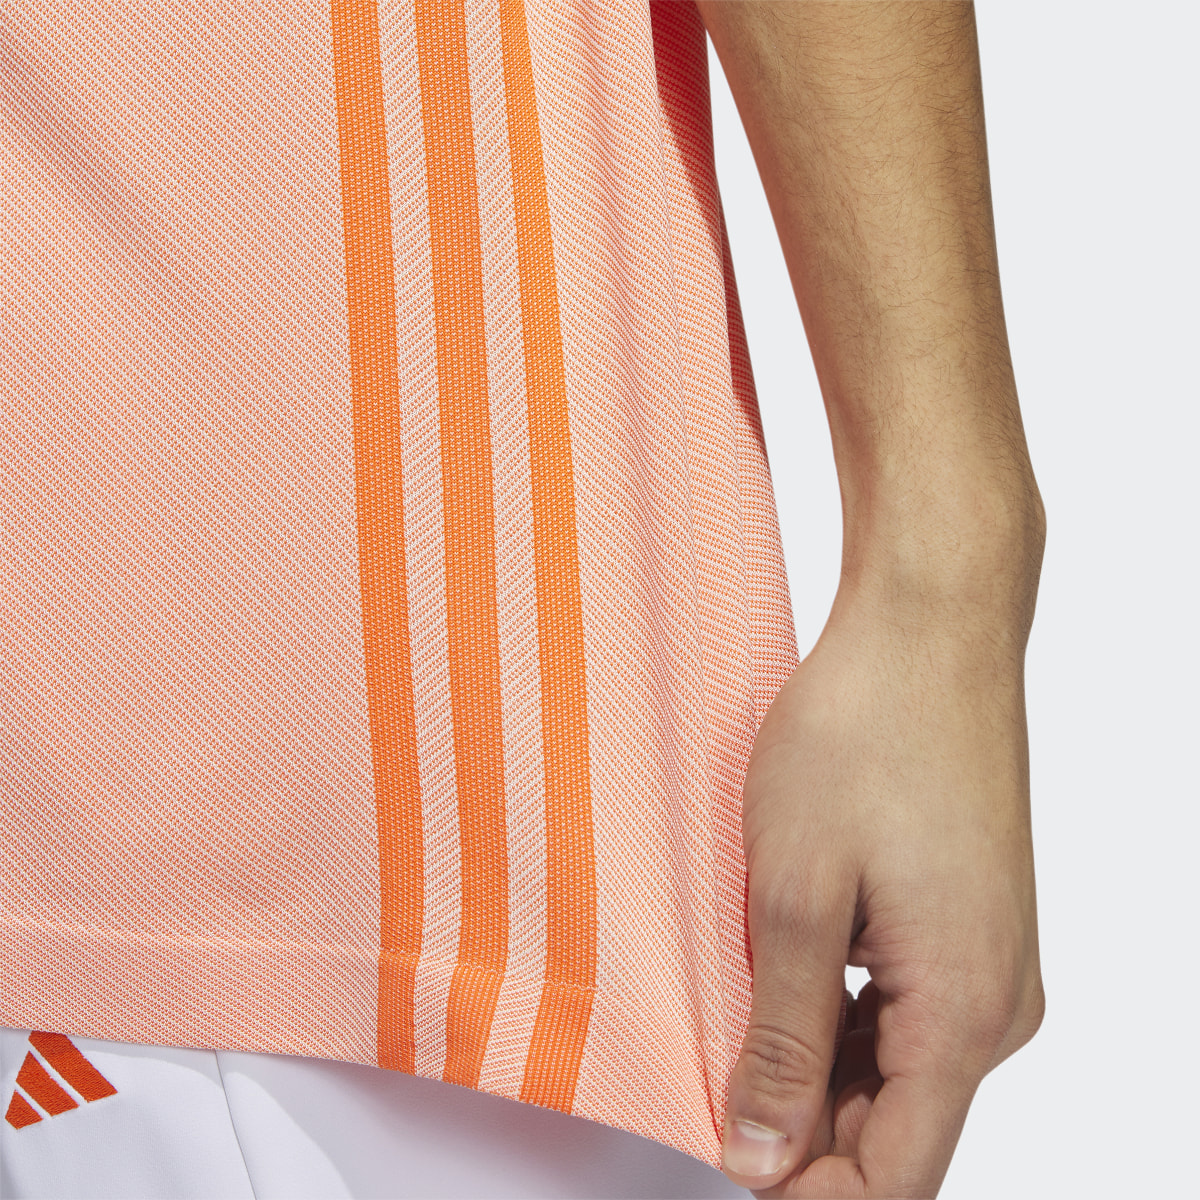 Adidas Made To Be Remade Henry Neck Seamless Golf Shirt. 8